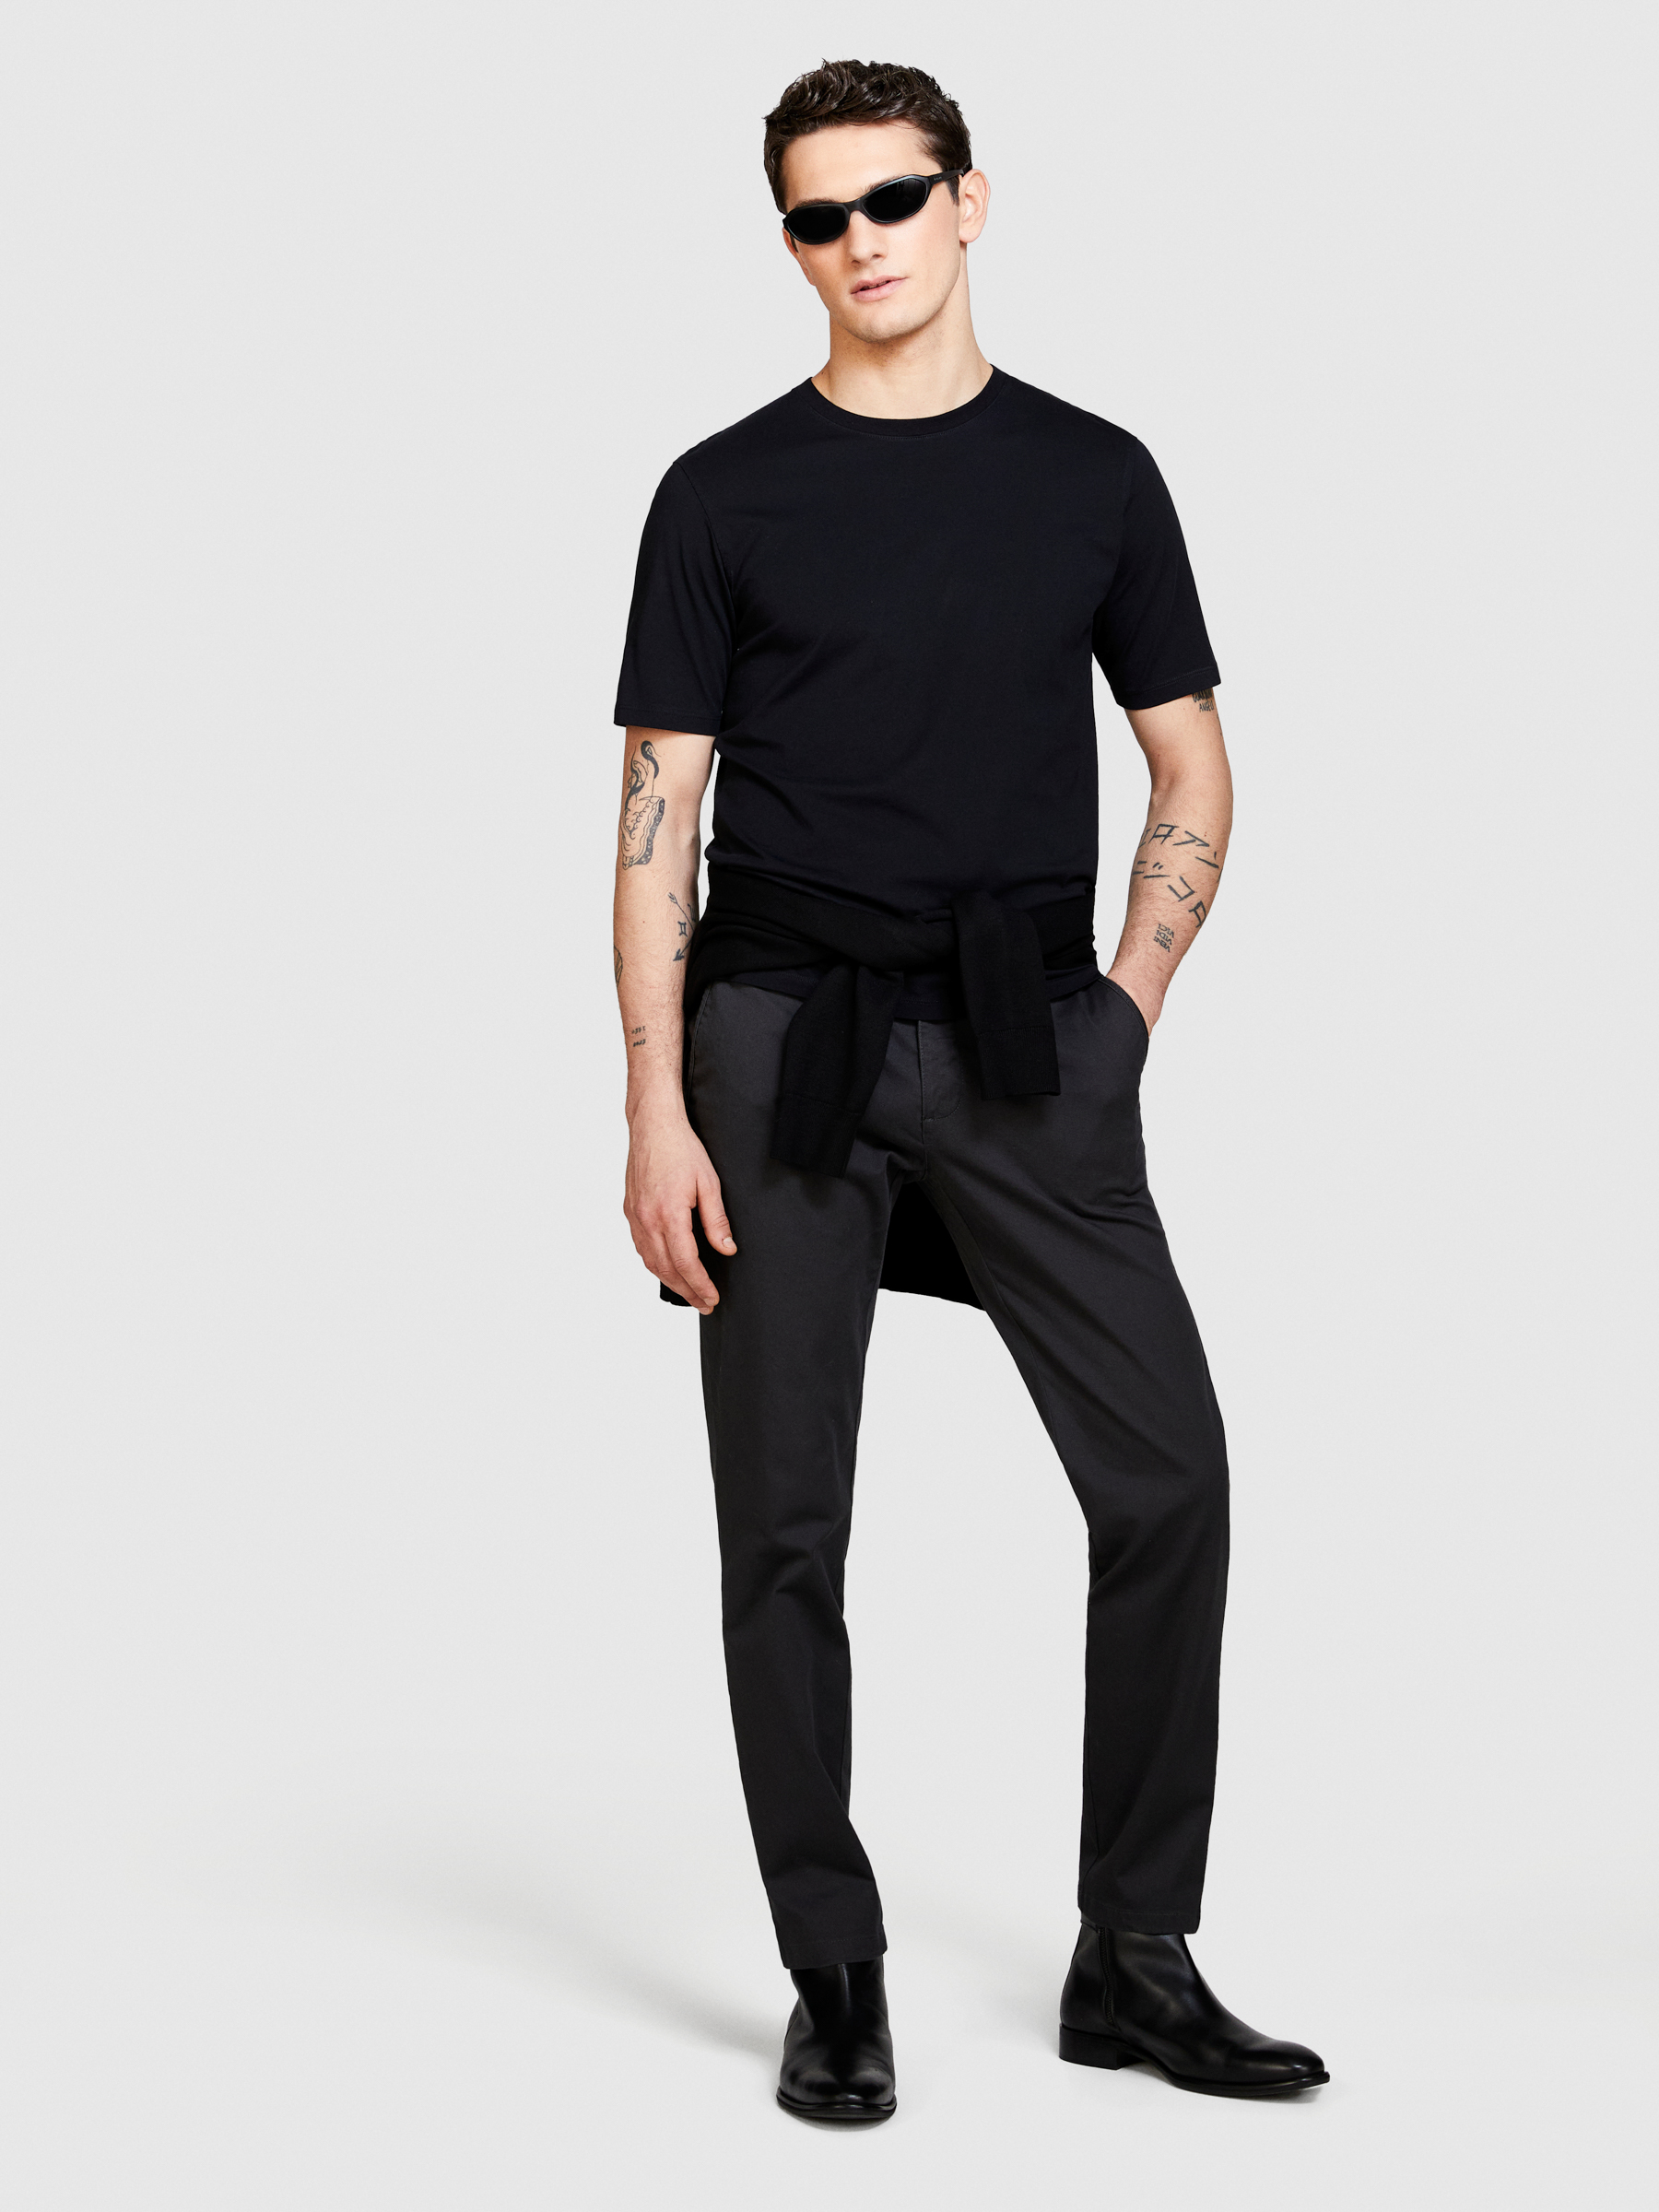 Sisley - Solid Color T-shirt, Man, Black, Size: M